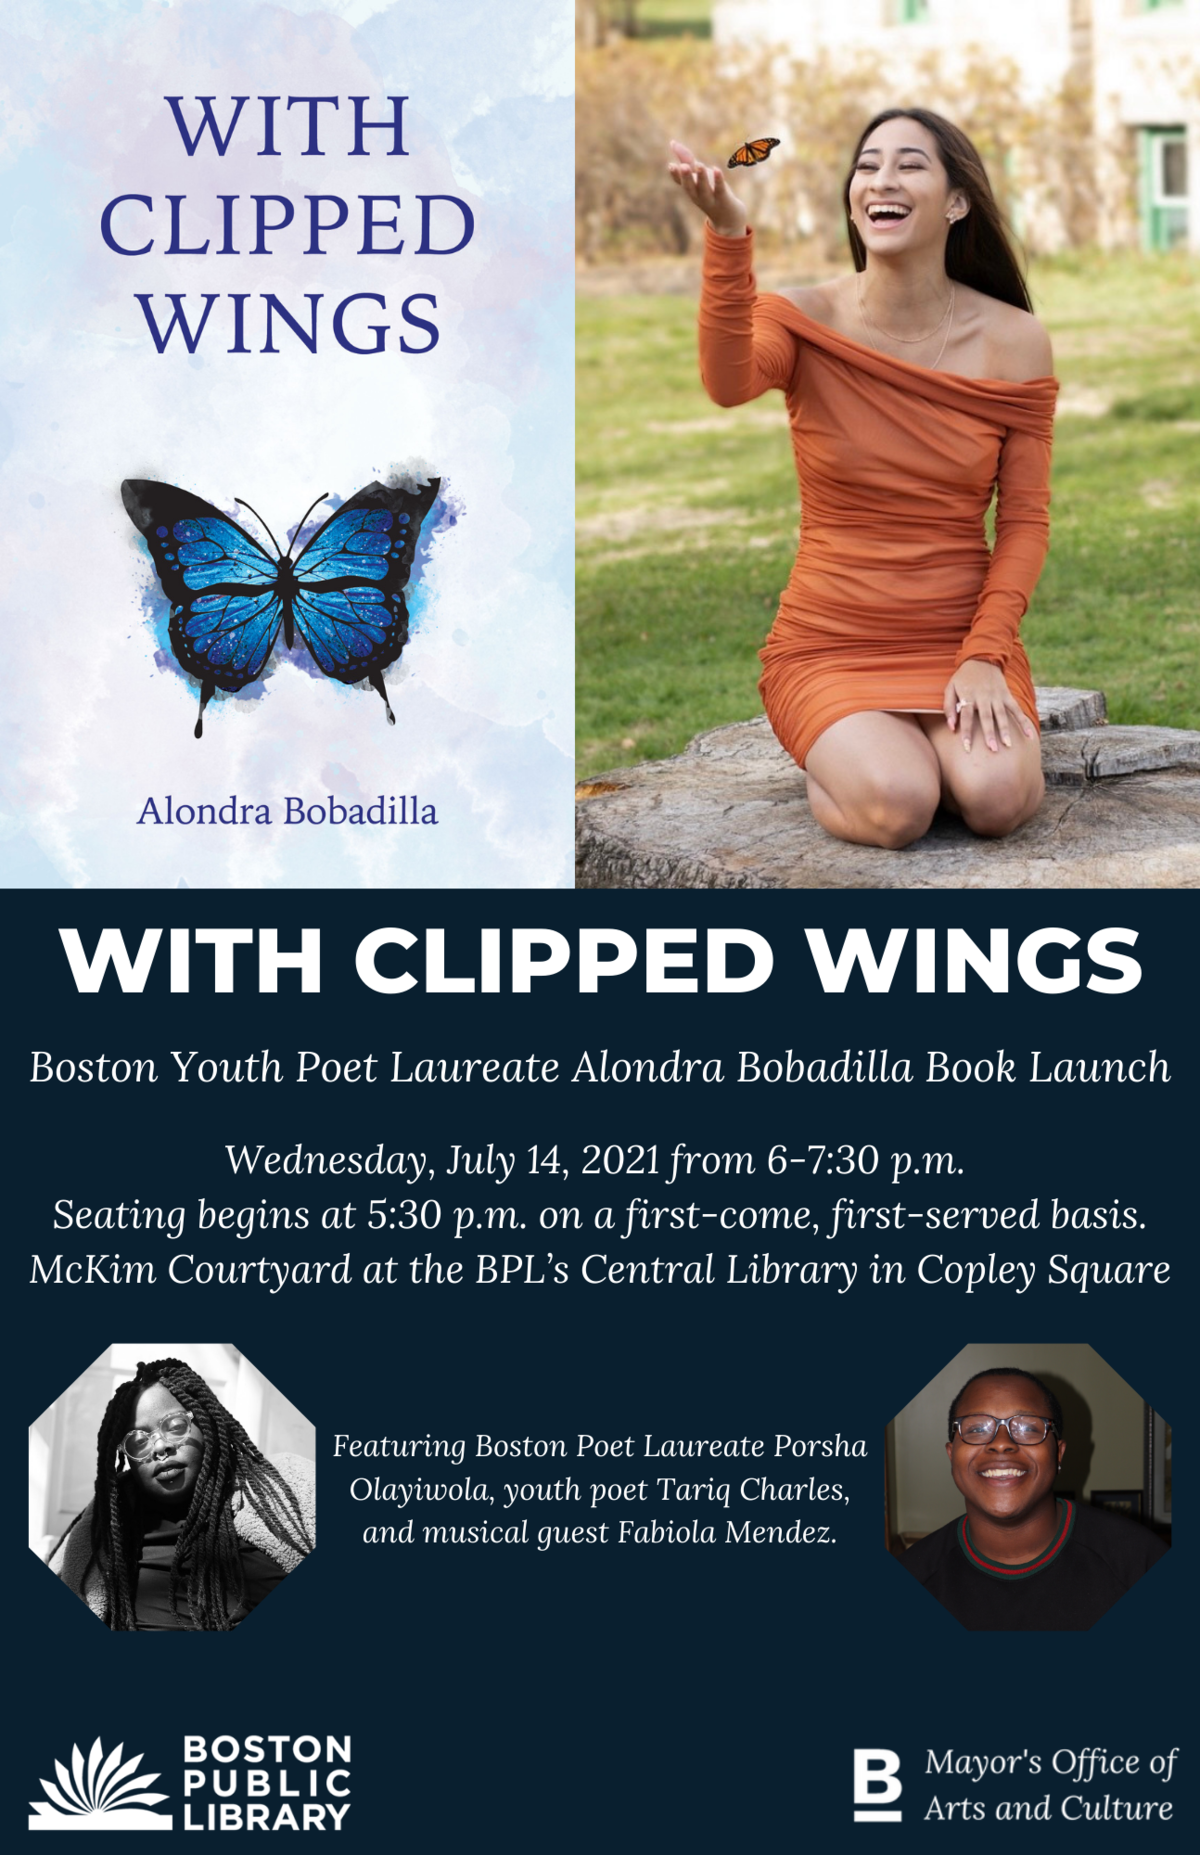 Alondra book launch event flyer